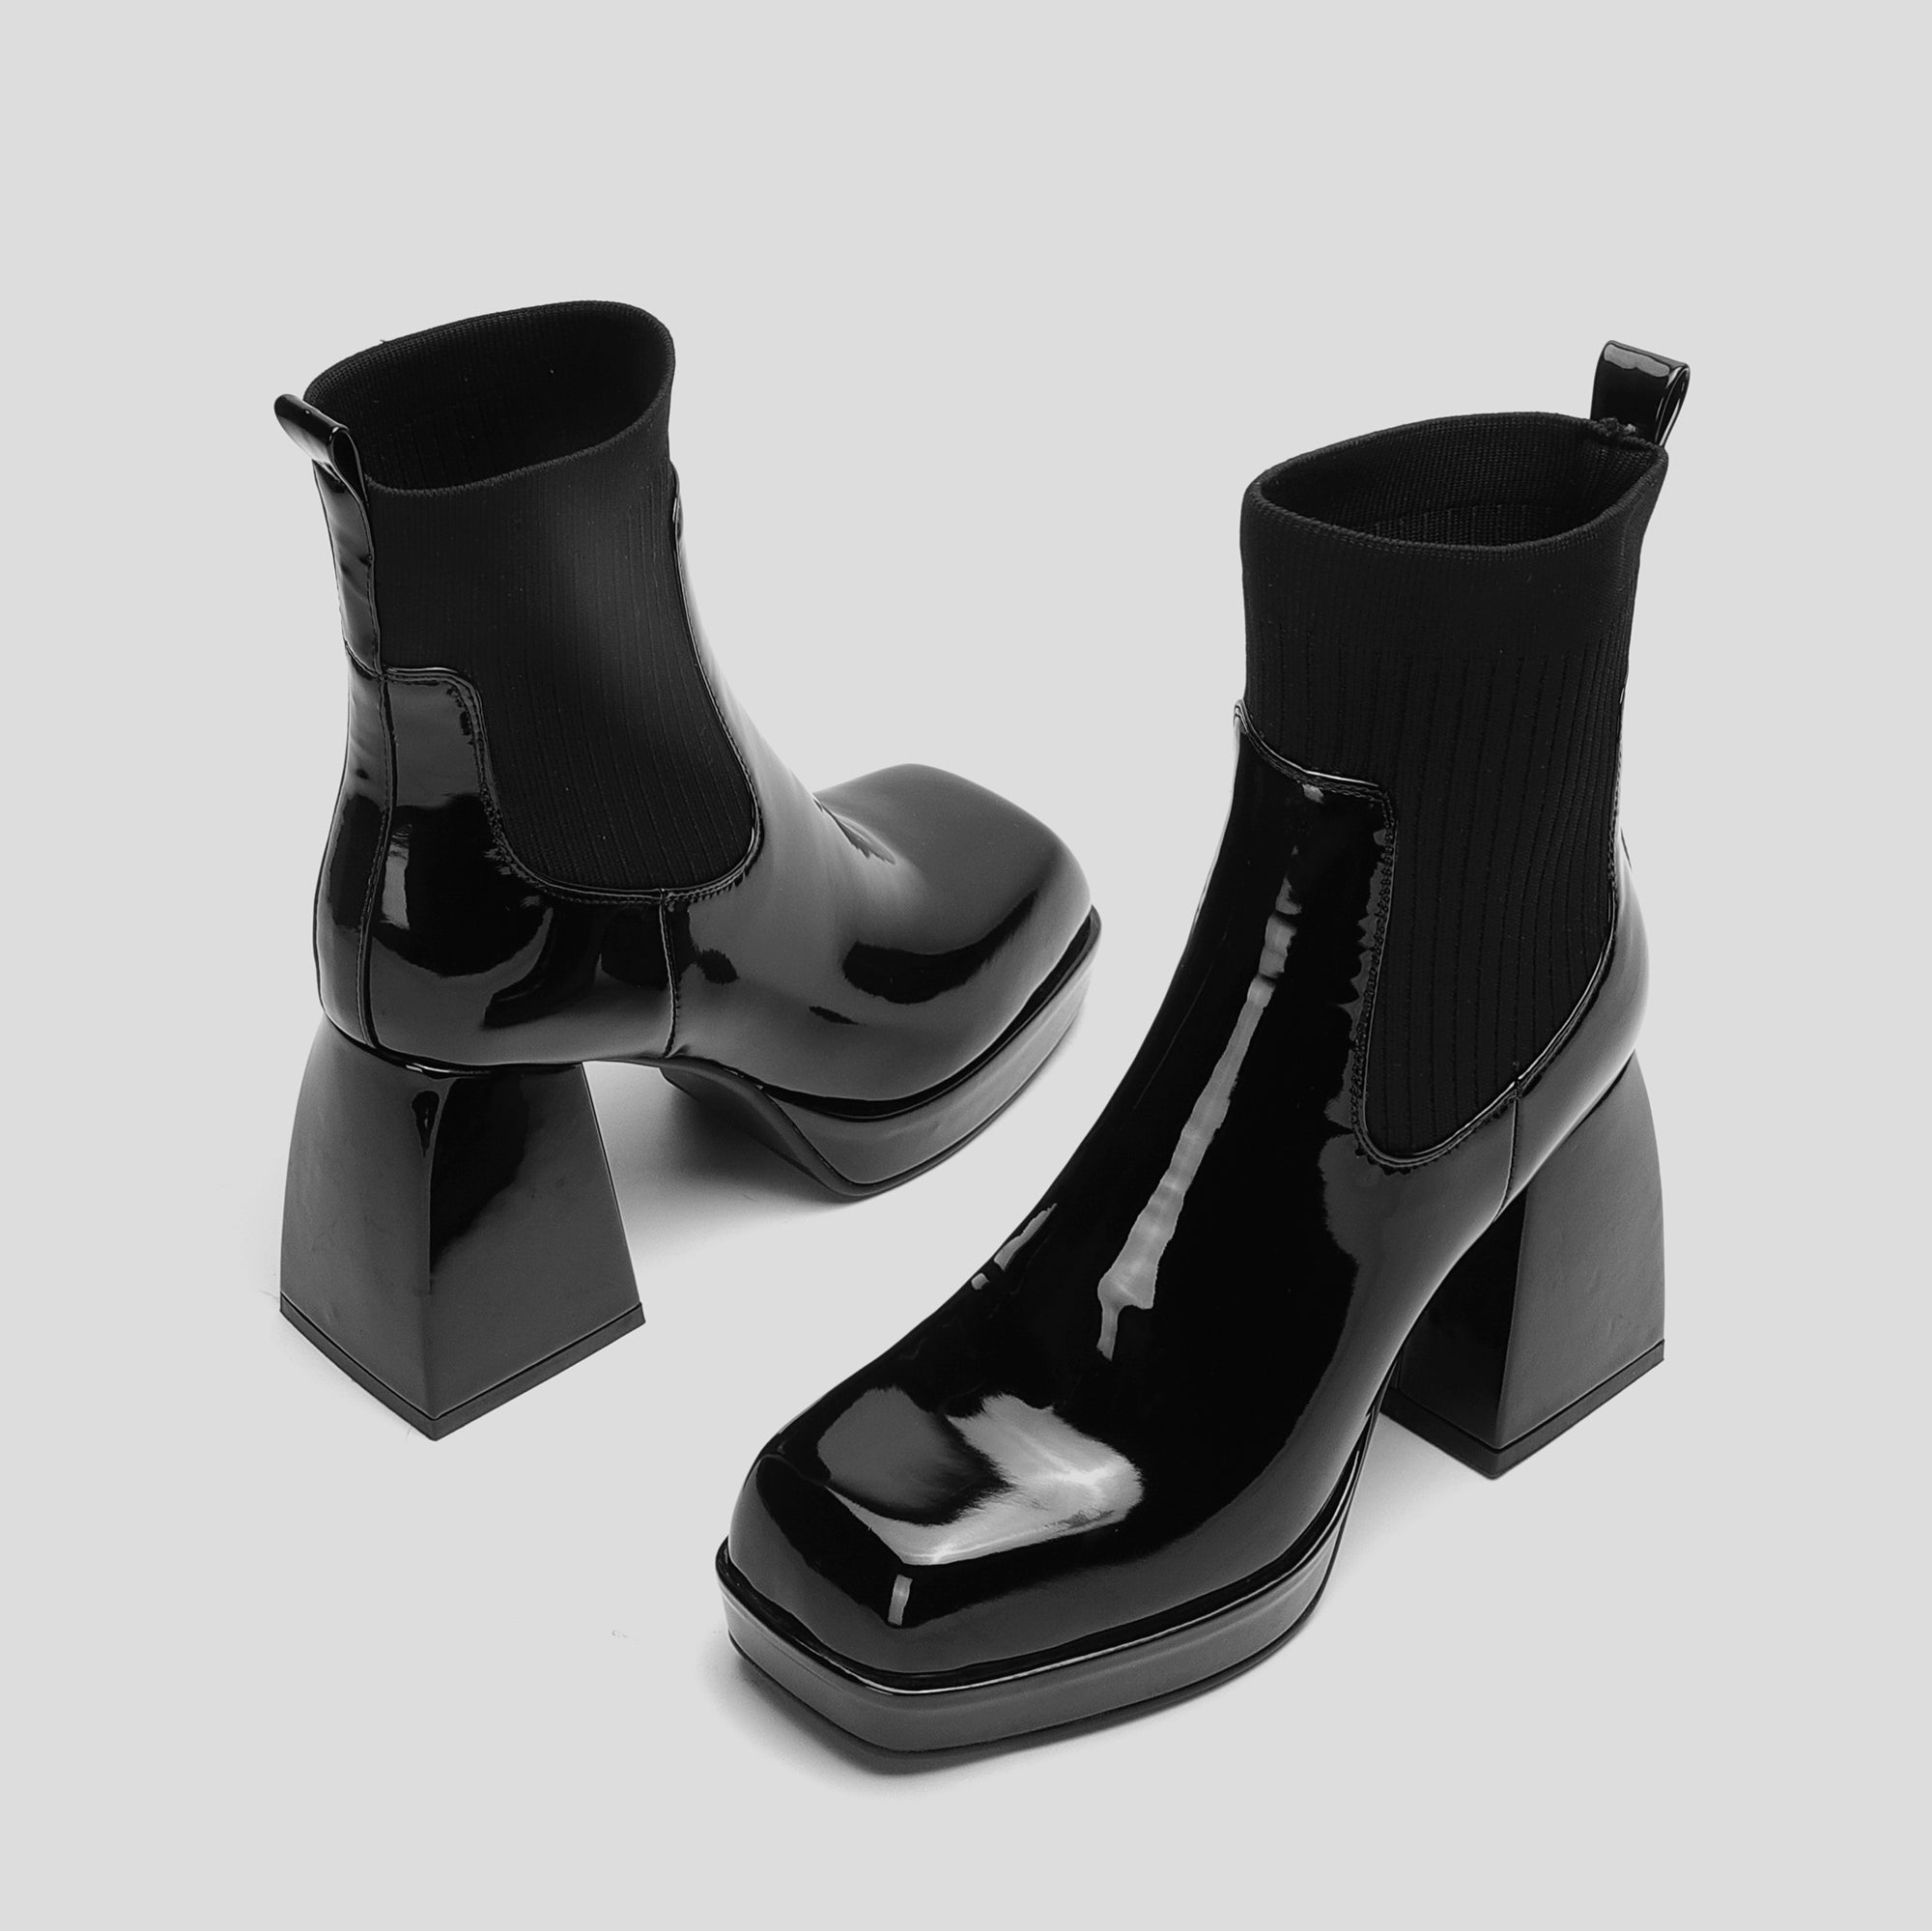 Bigsizeheels Square-toe block-heeled thick-soled patent leather boots - Black freeshipping - bigsizeheel®-size5-size15 -All Plus Sizes Available!